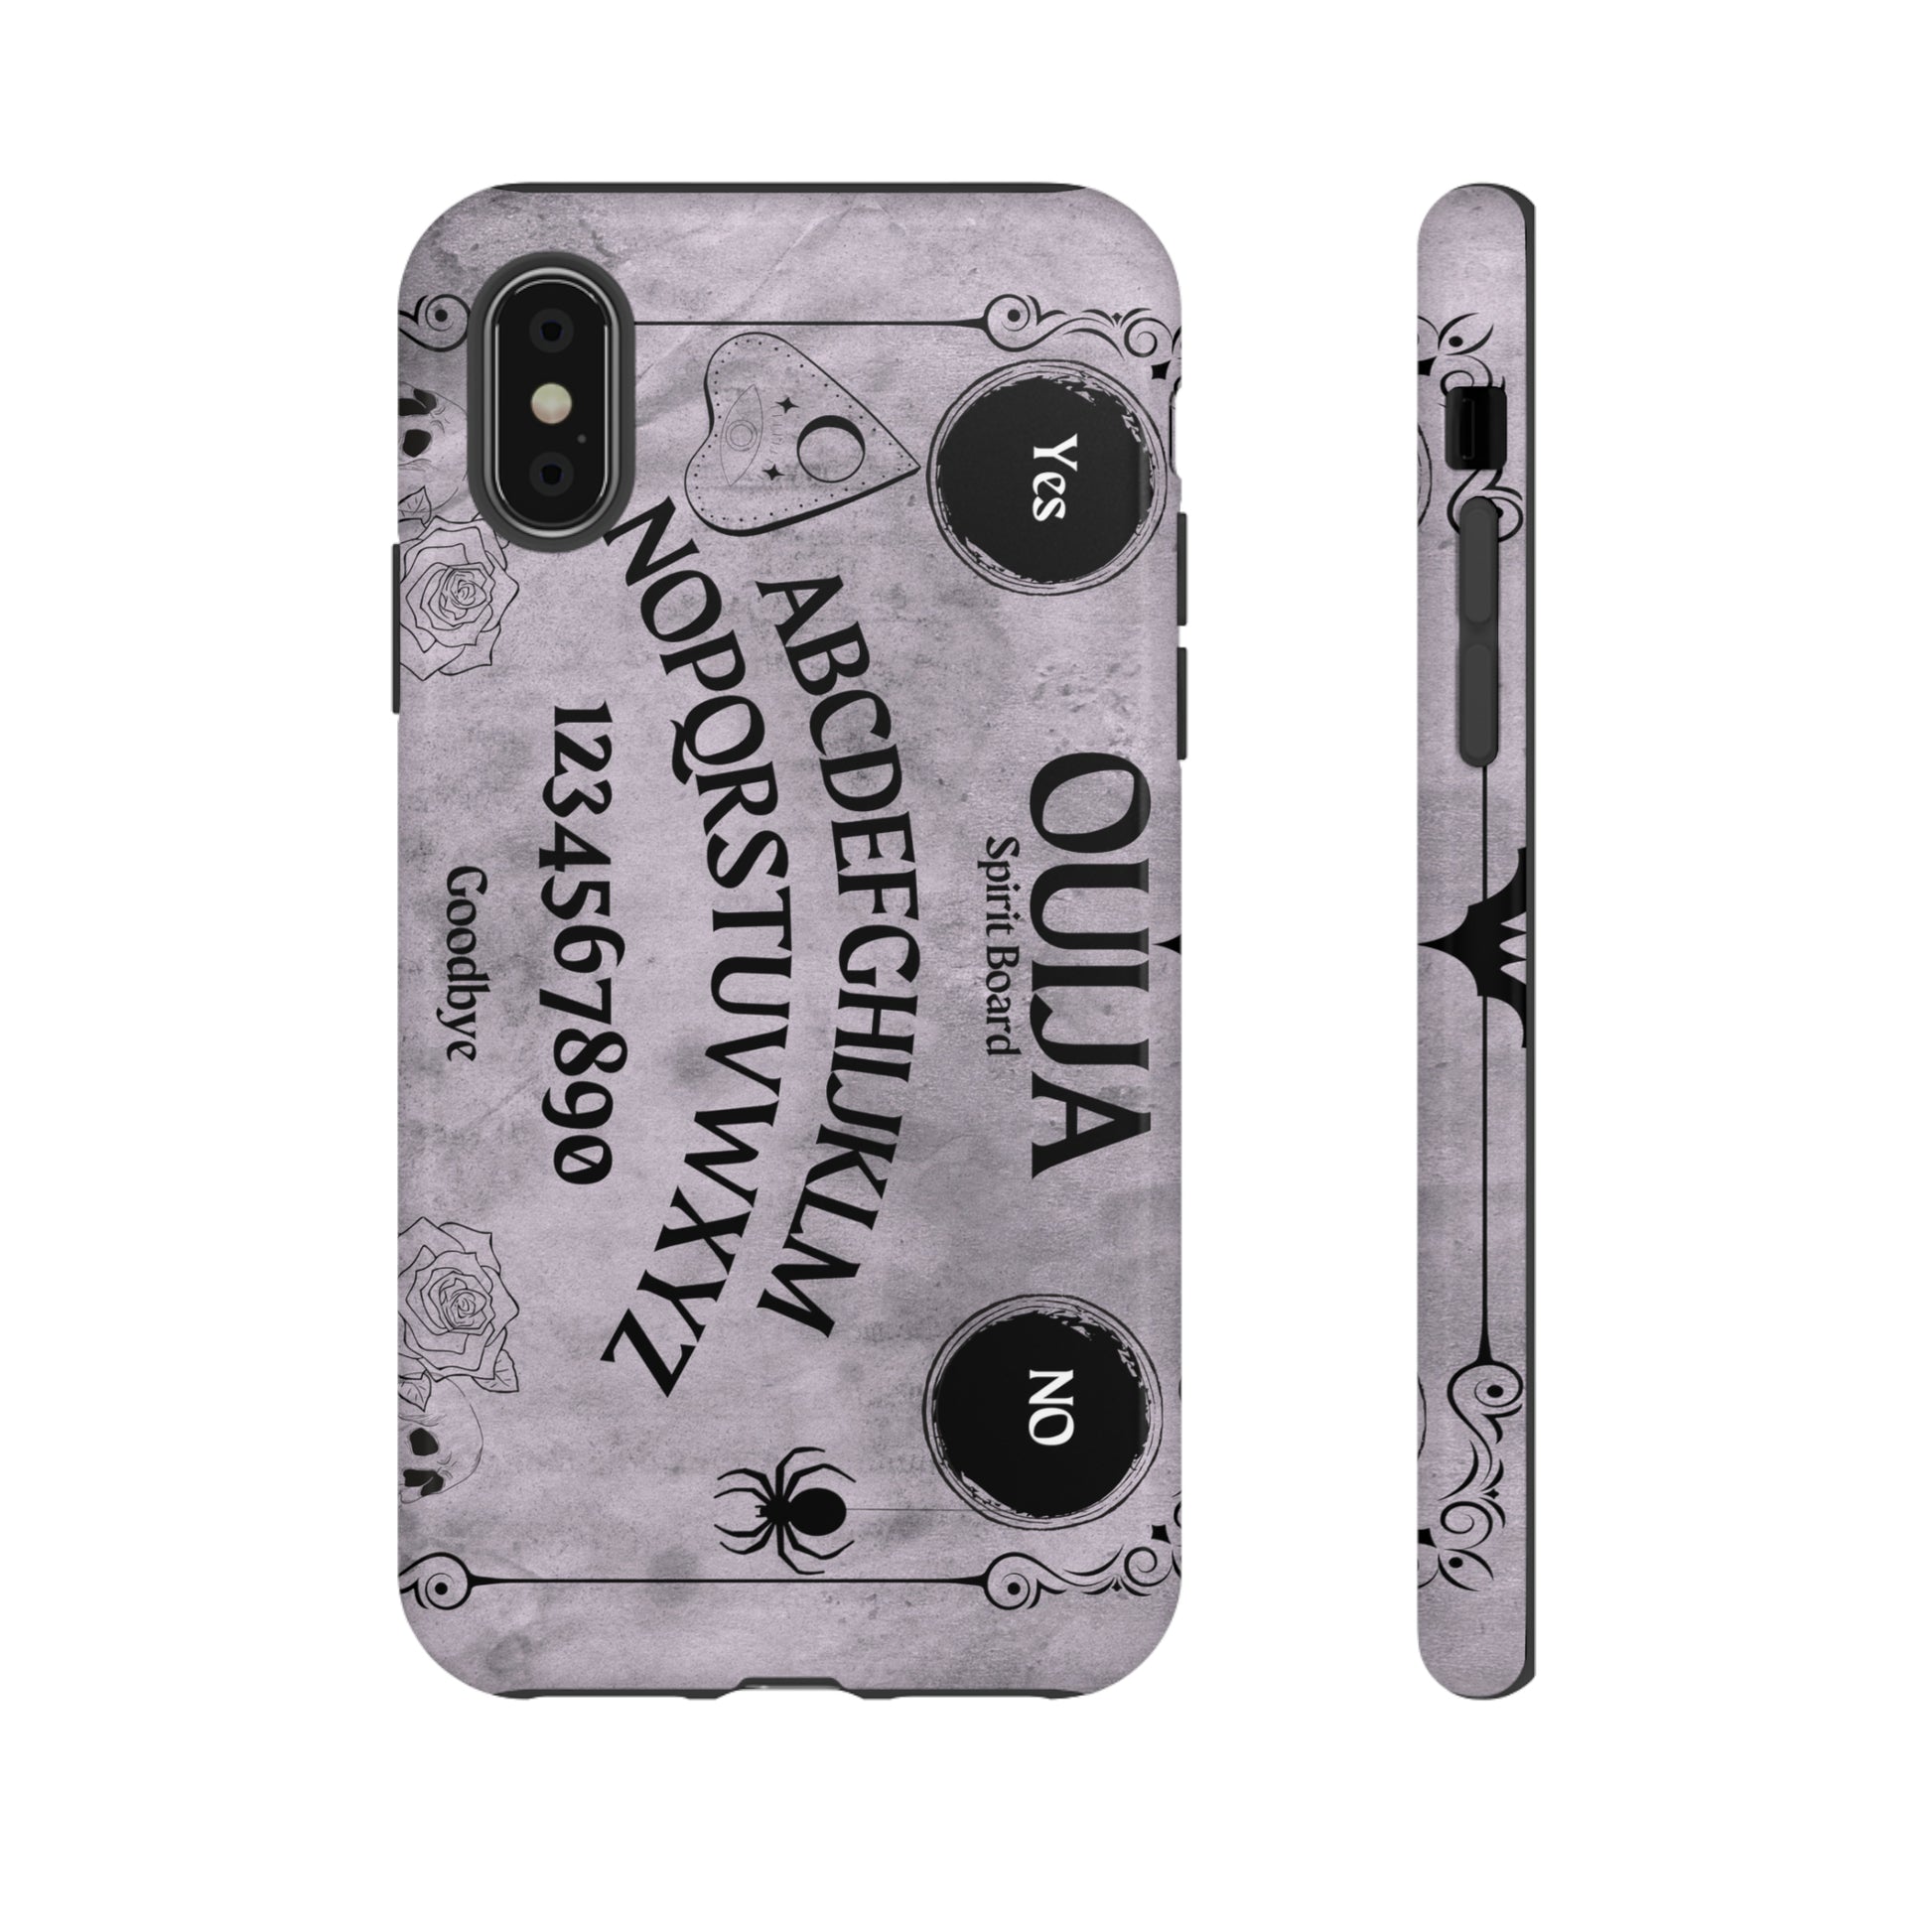 Ouija Board Tough Phone Cases For Samsung iPhone GooglePhone CaseVTZdesignsiPhone XSGlossyAccessoriesGlossyhalloween